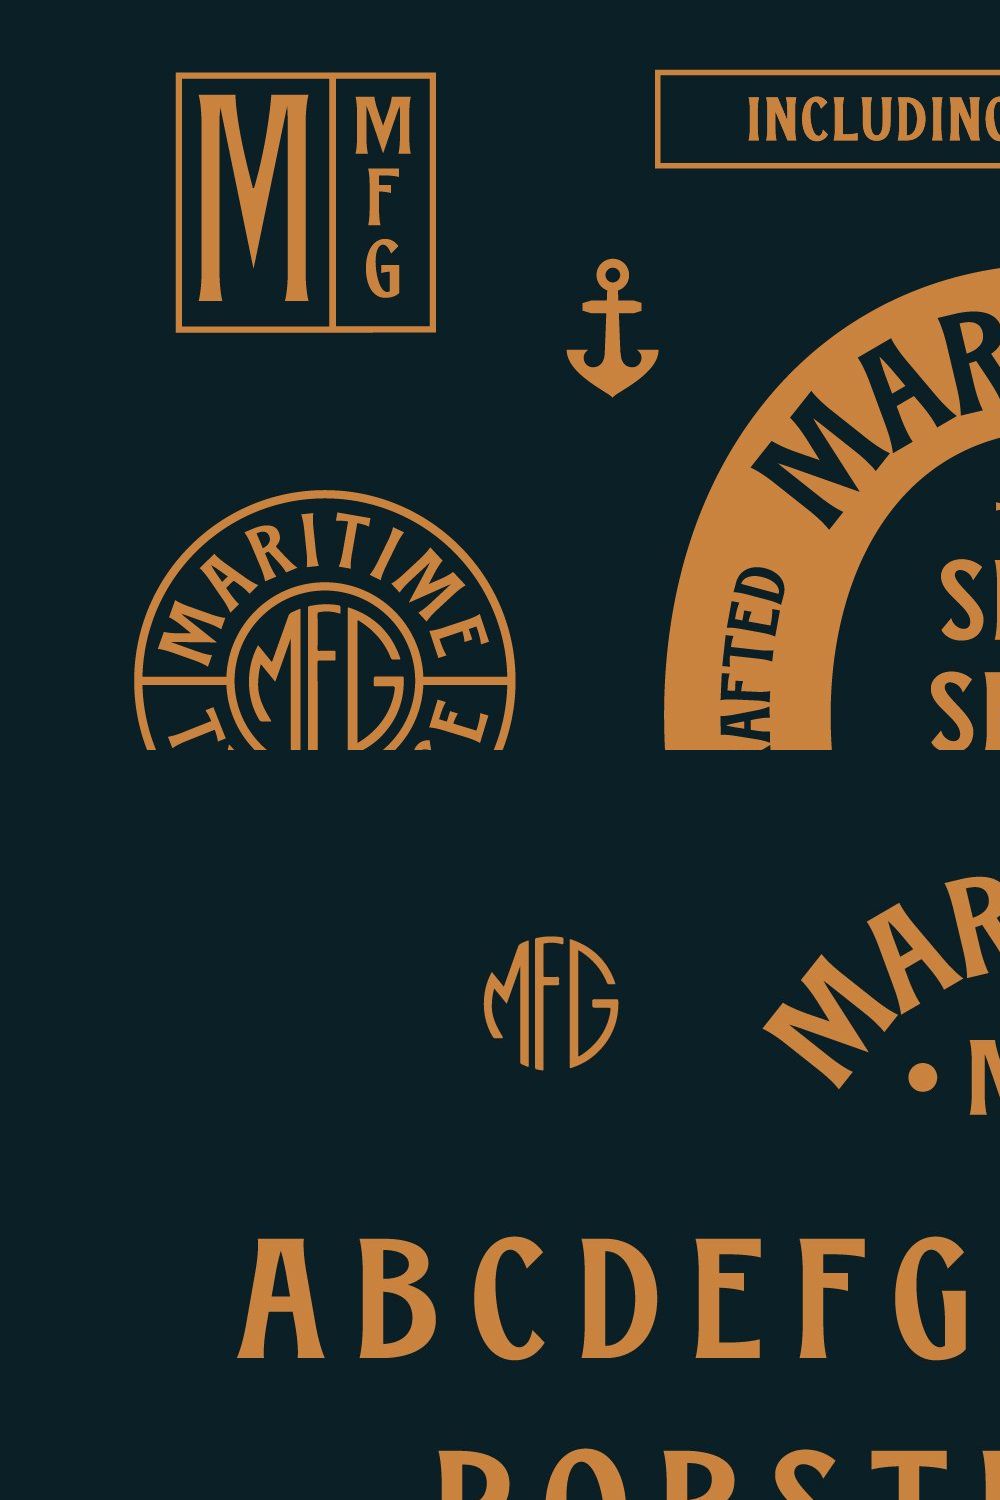 Maritime MFG - A Spur Serif Typeface pinterest preview image.